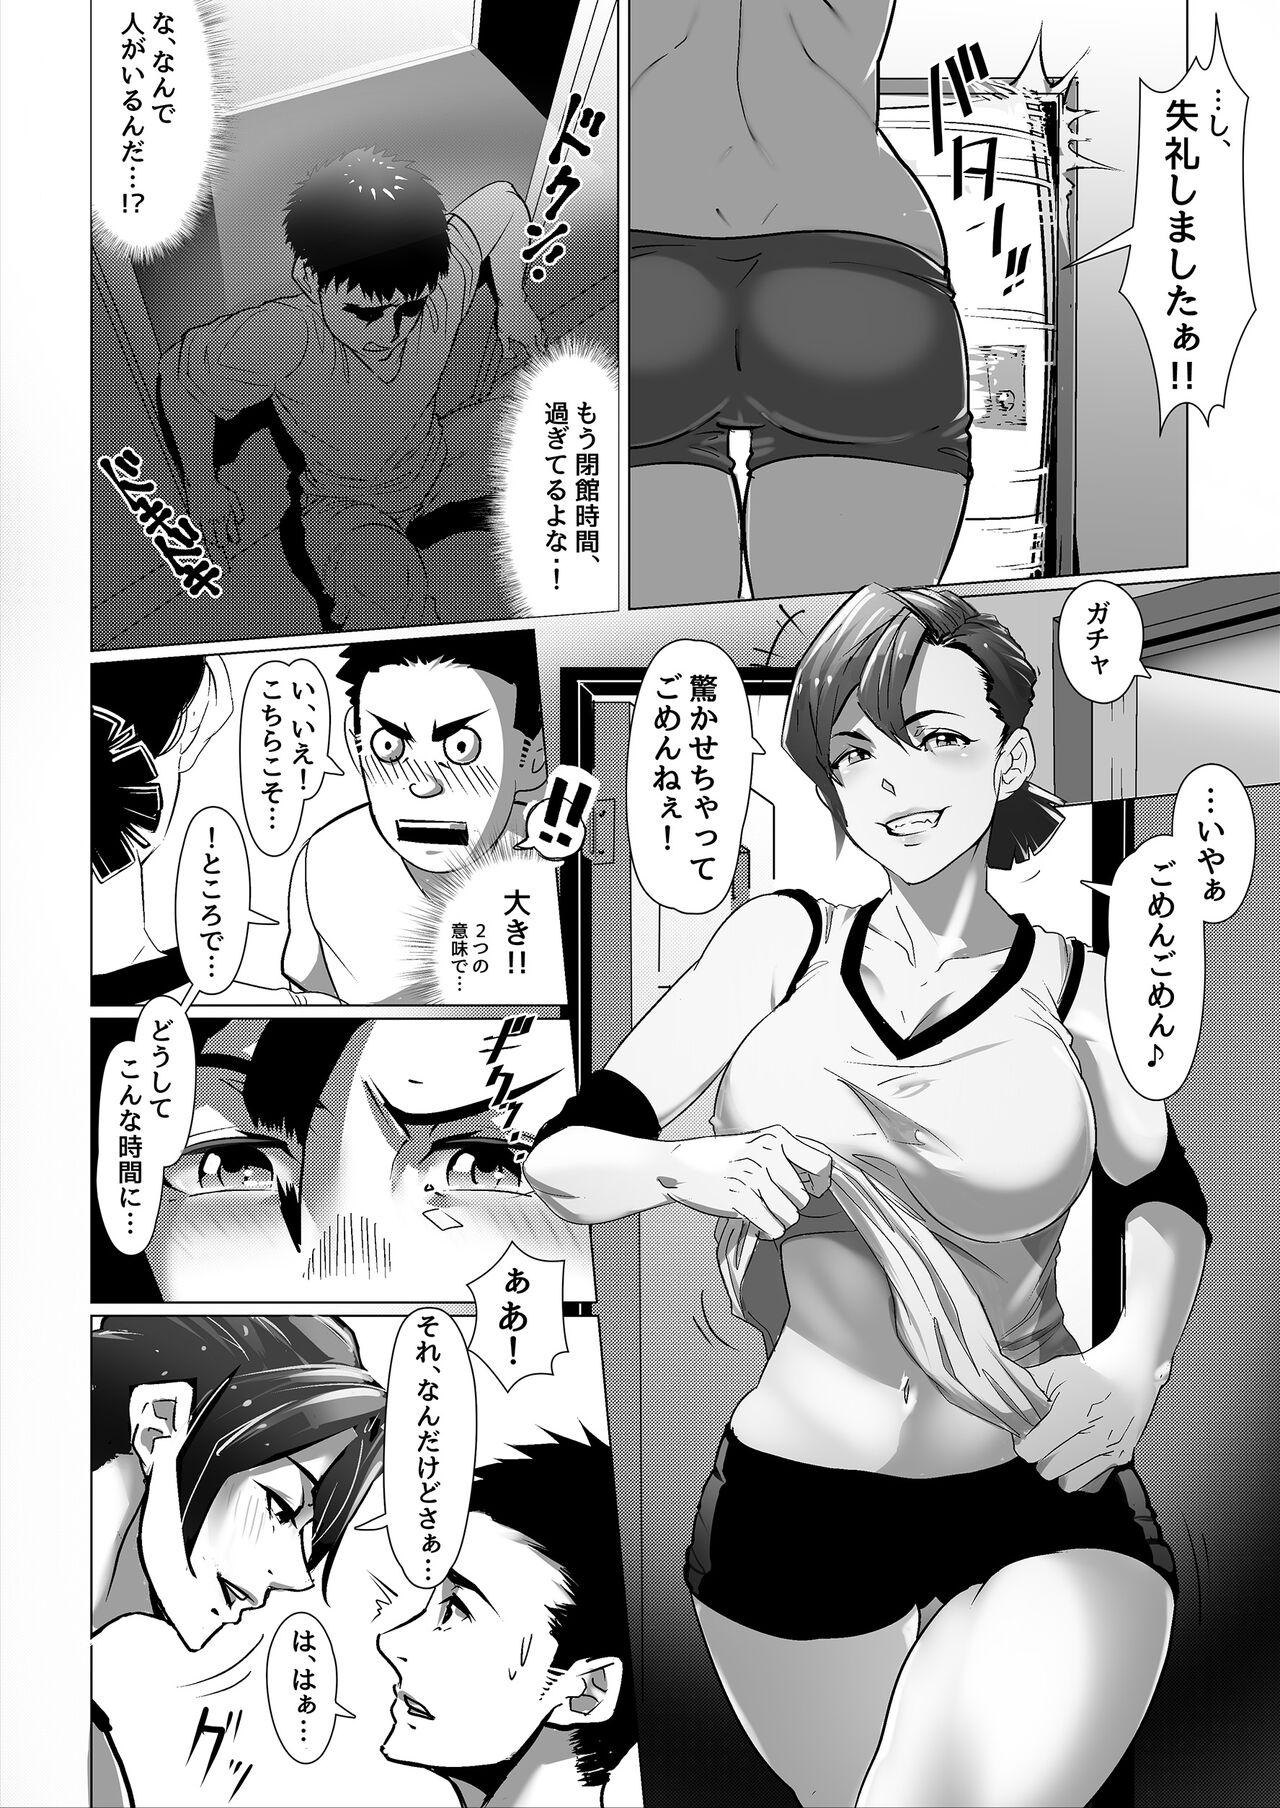 Boots [Koda1ra] Lucky Happening - Women's Volleyball - Vol 3 - Original Long - Page 4